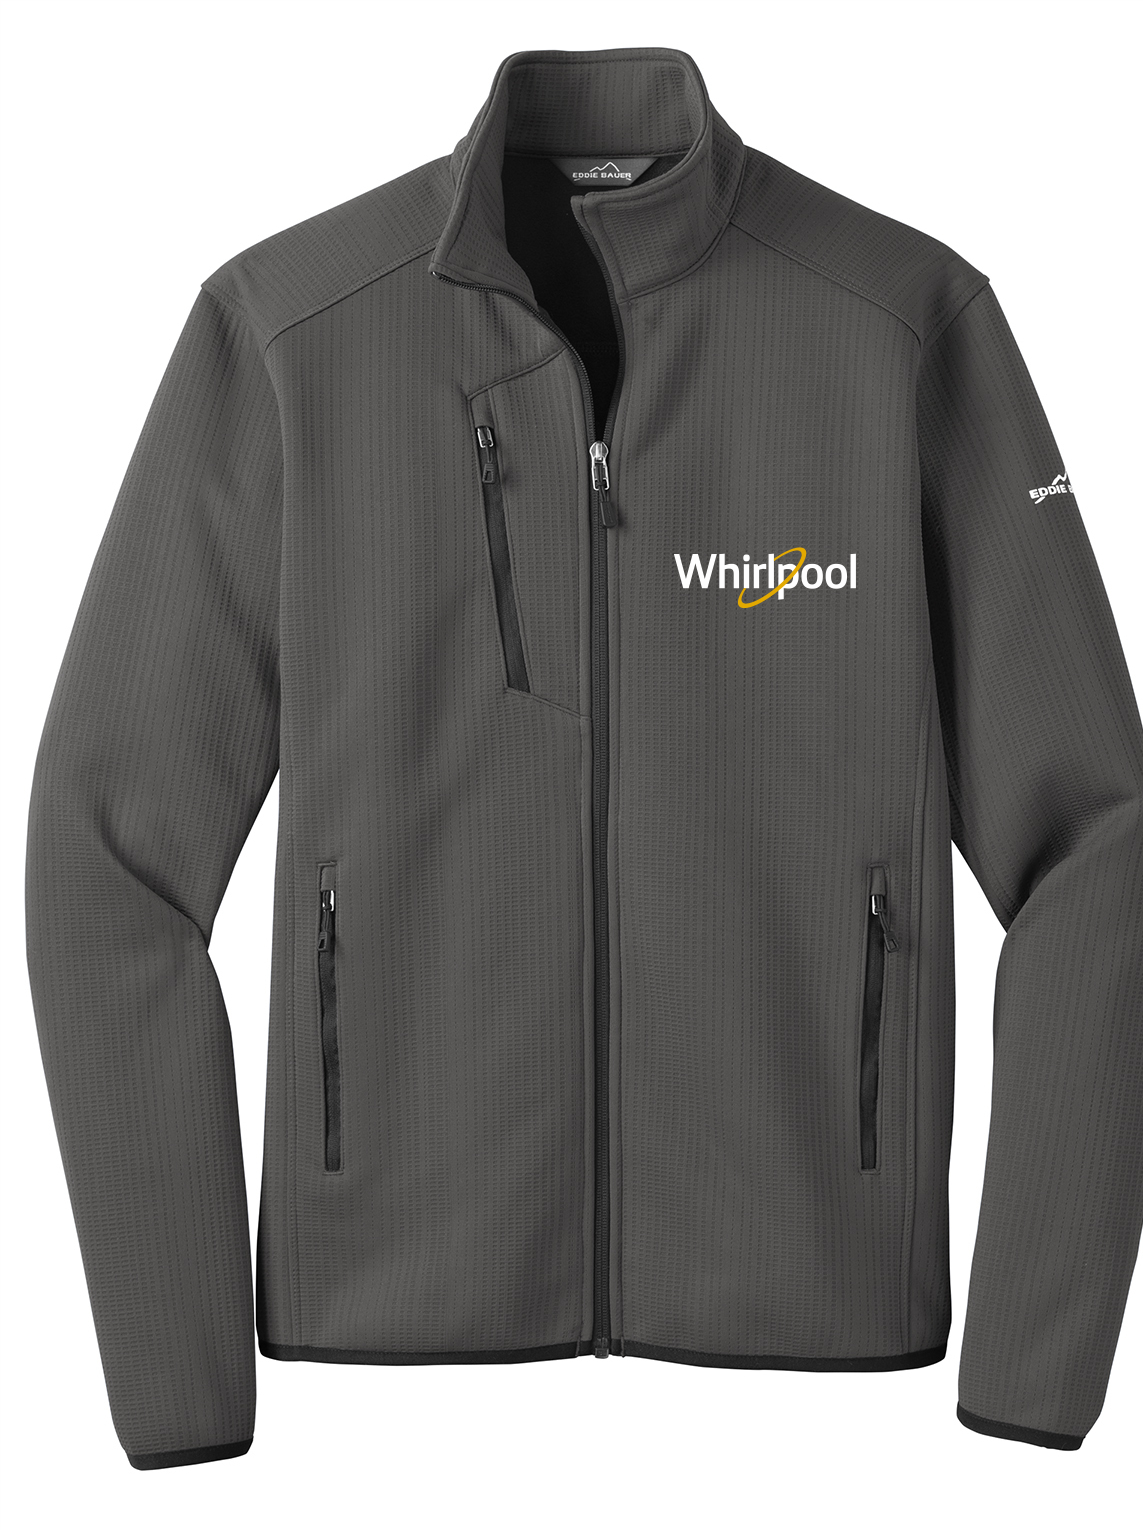 Eddie Bauer ® Dash Full-Zip Fleece Jacket (Whirlpool)